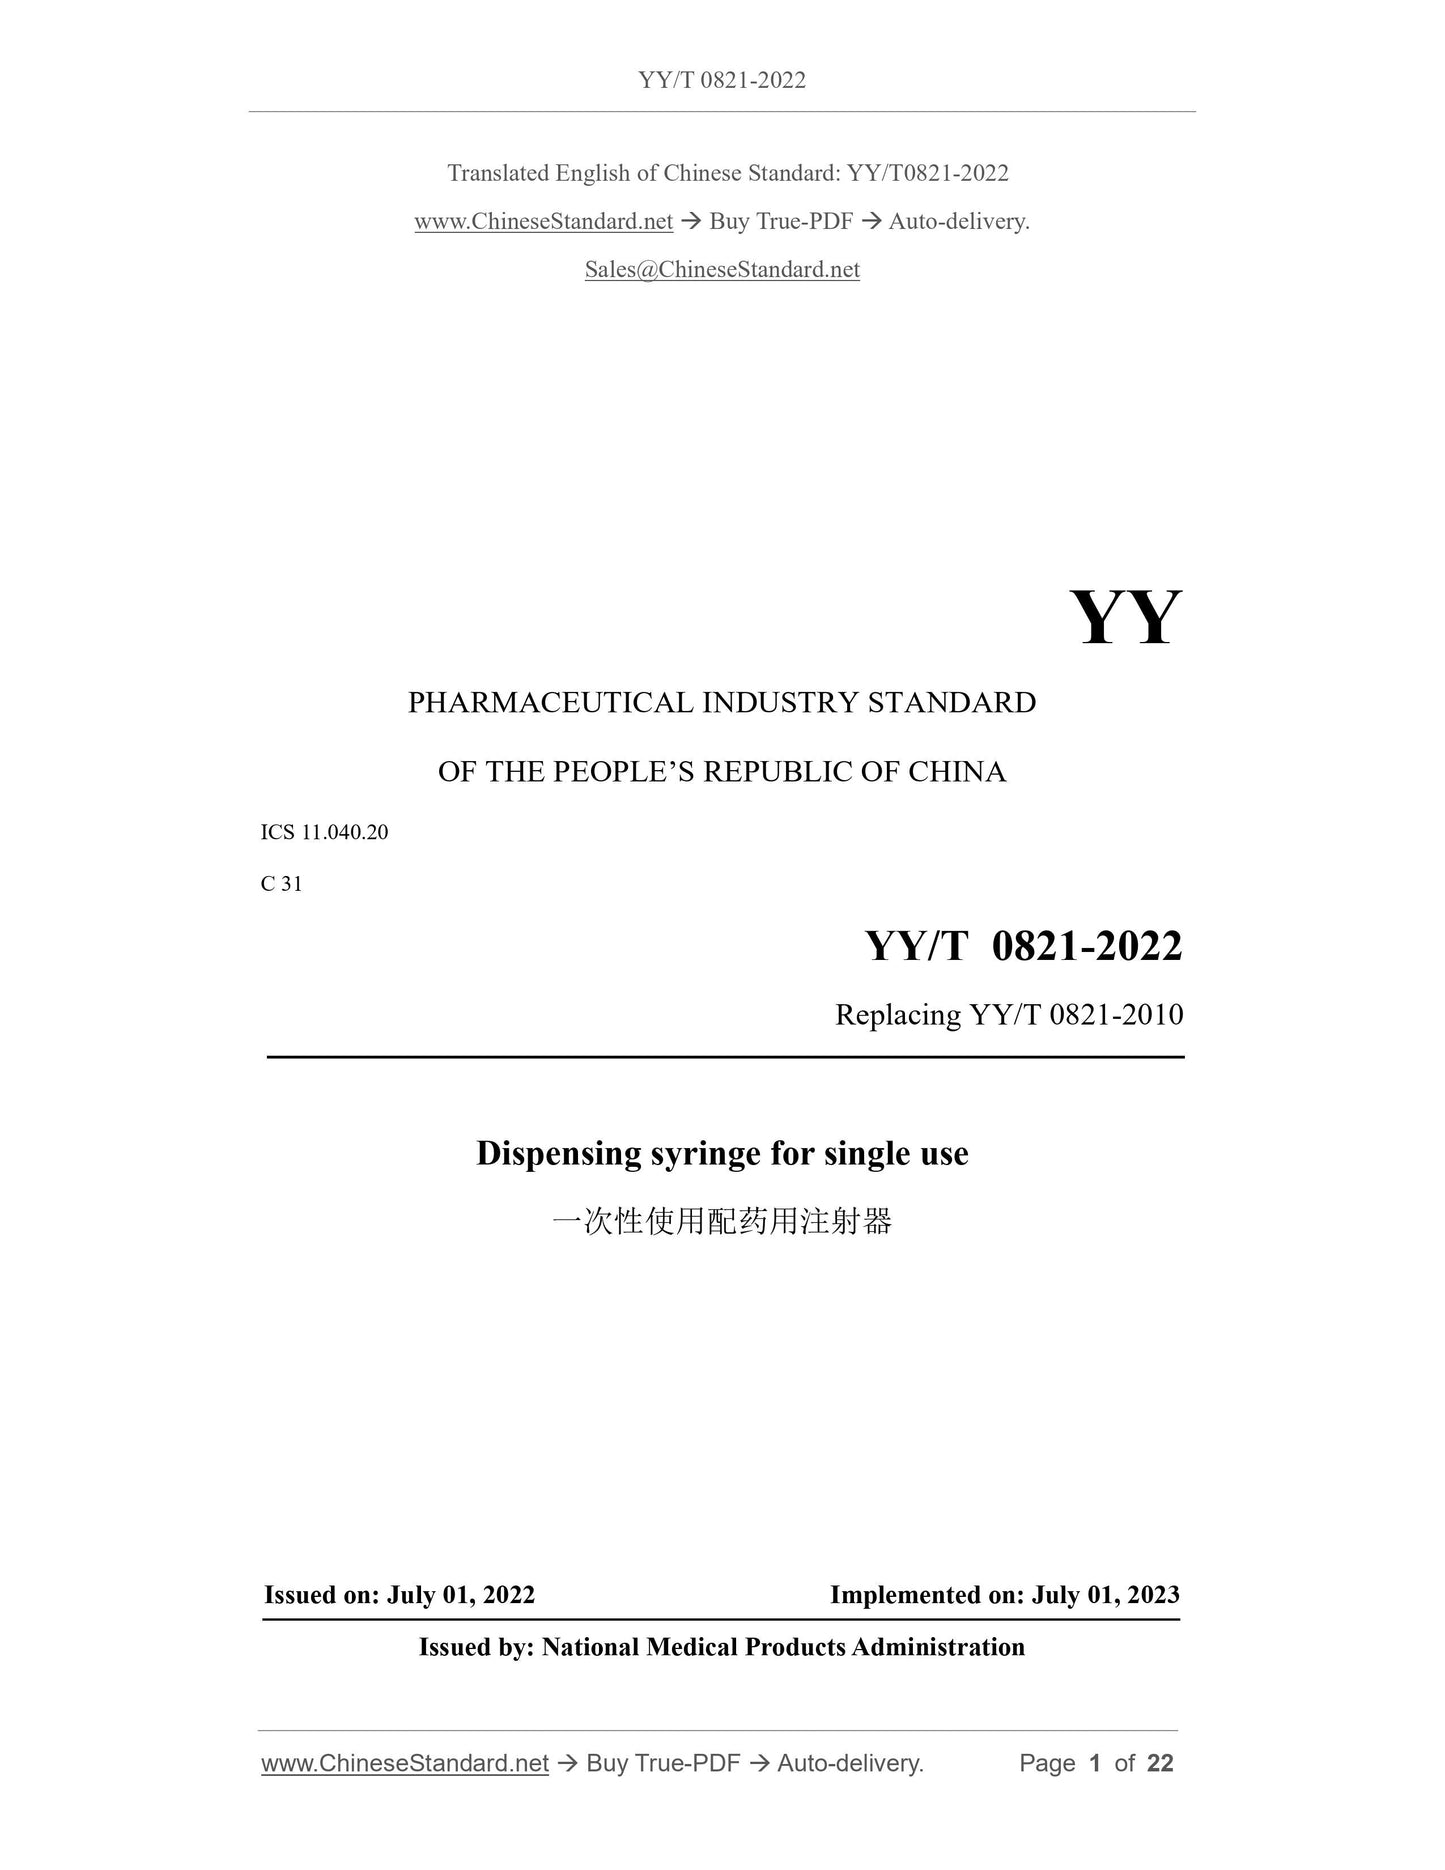 YY/T 0821-2022 Page 1